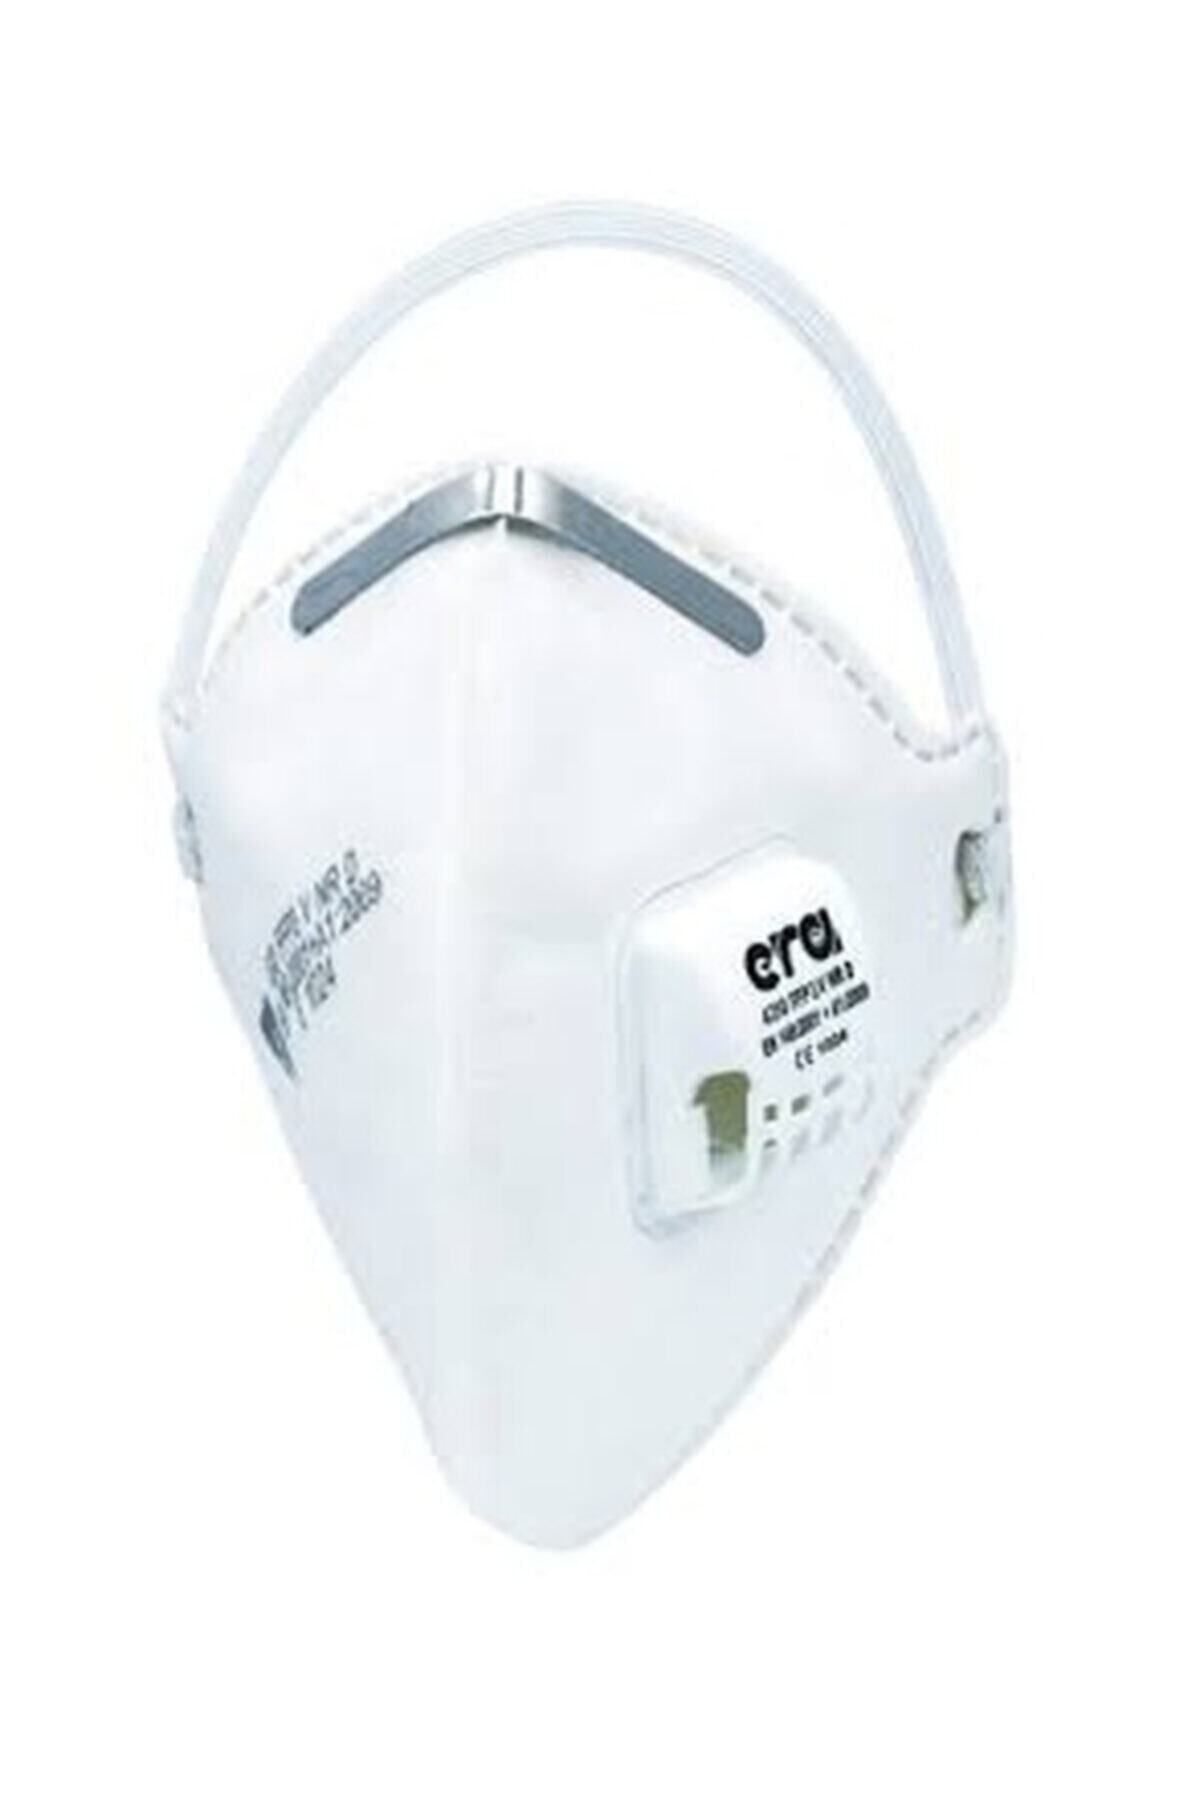 ERA 4310 Ffp3 Ventilli Maske Sertifikalı N95 Maske Koruması 10'lu